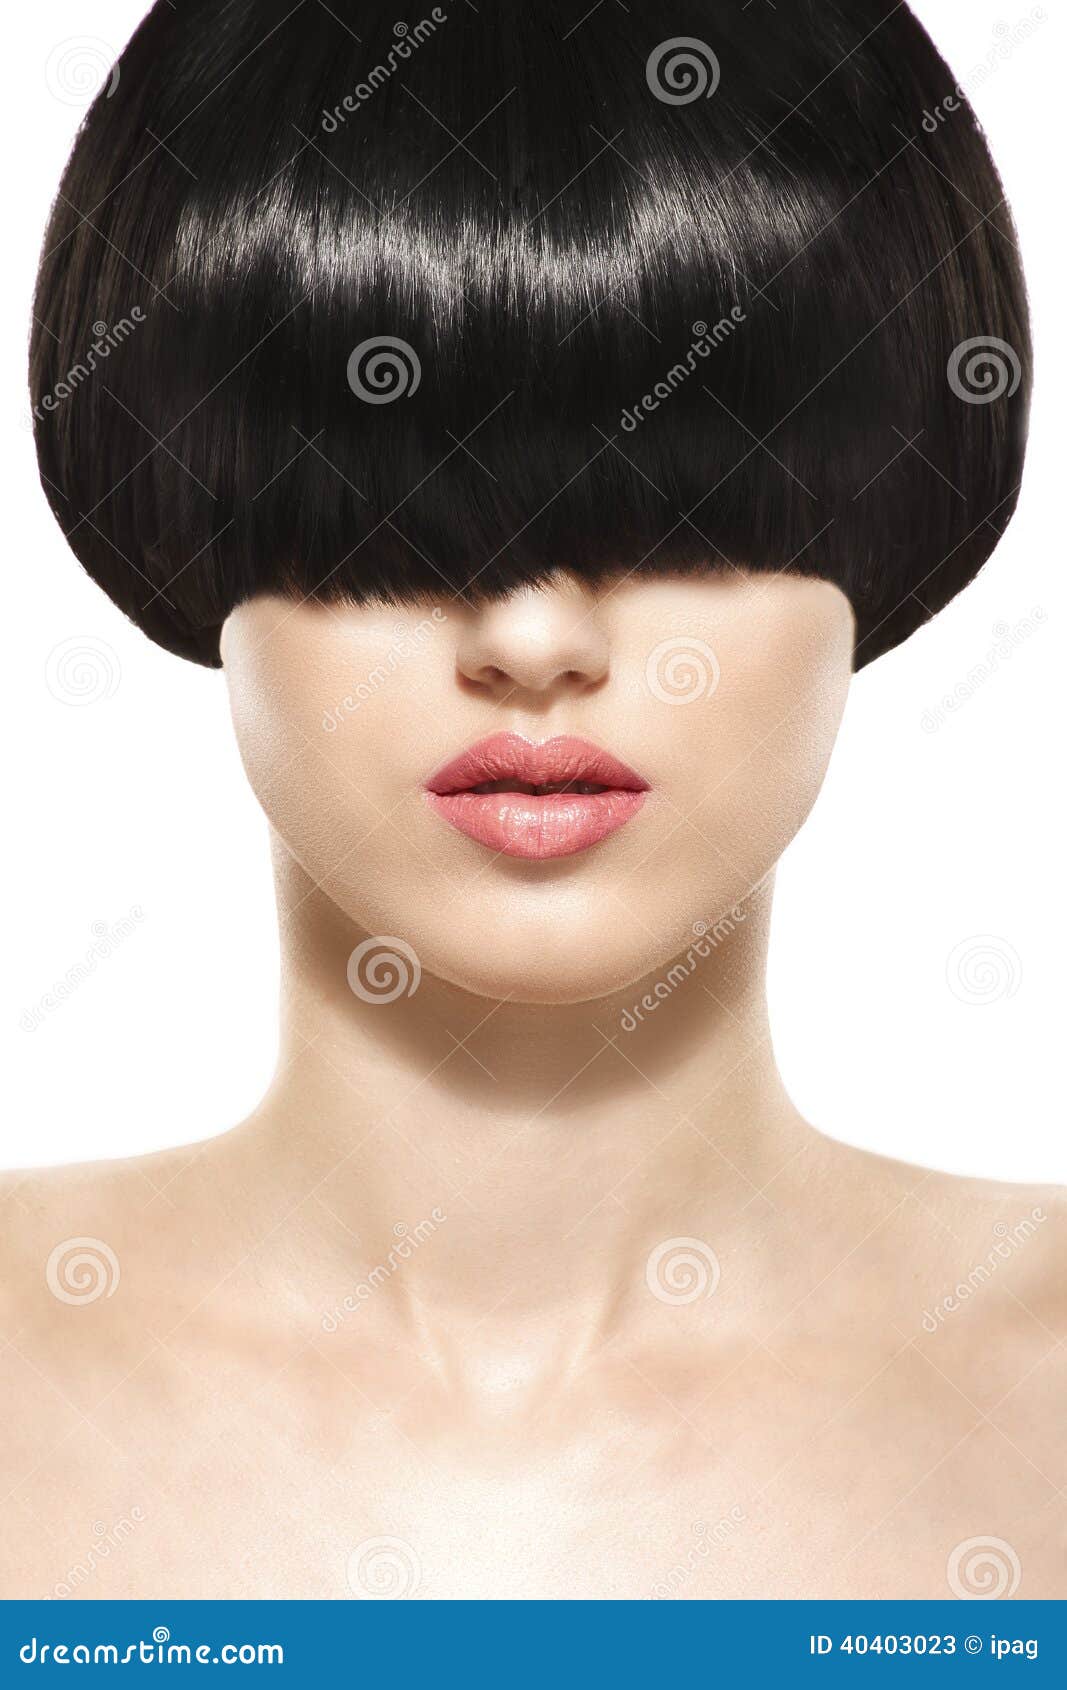 Fringe Hairstyle Beauty Girl with Short Hair Stock Image - Image of girl,  fashion: 40403023